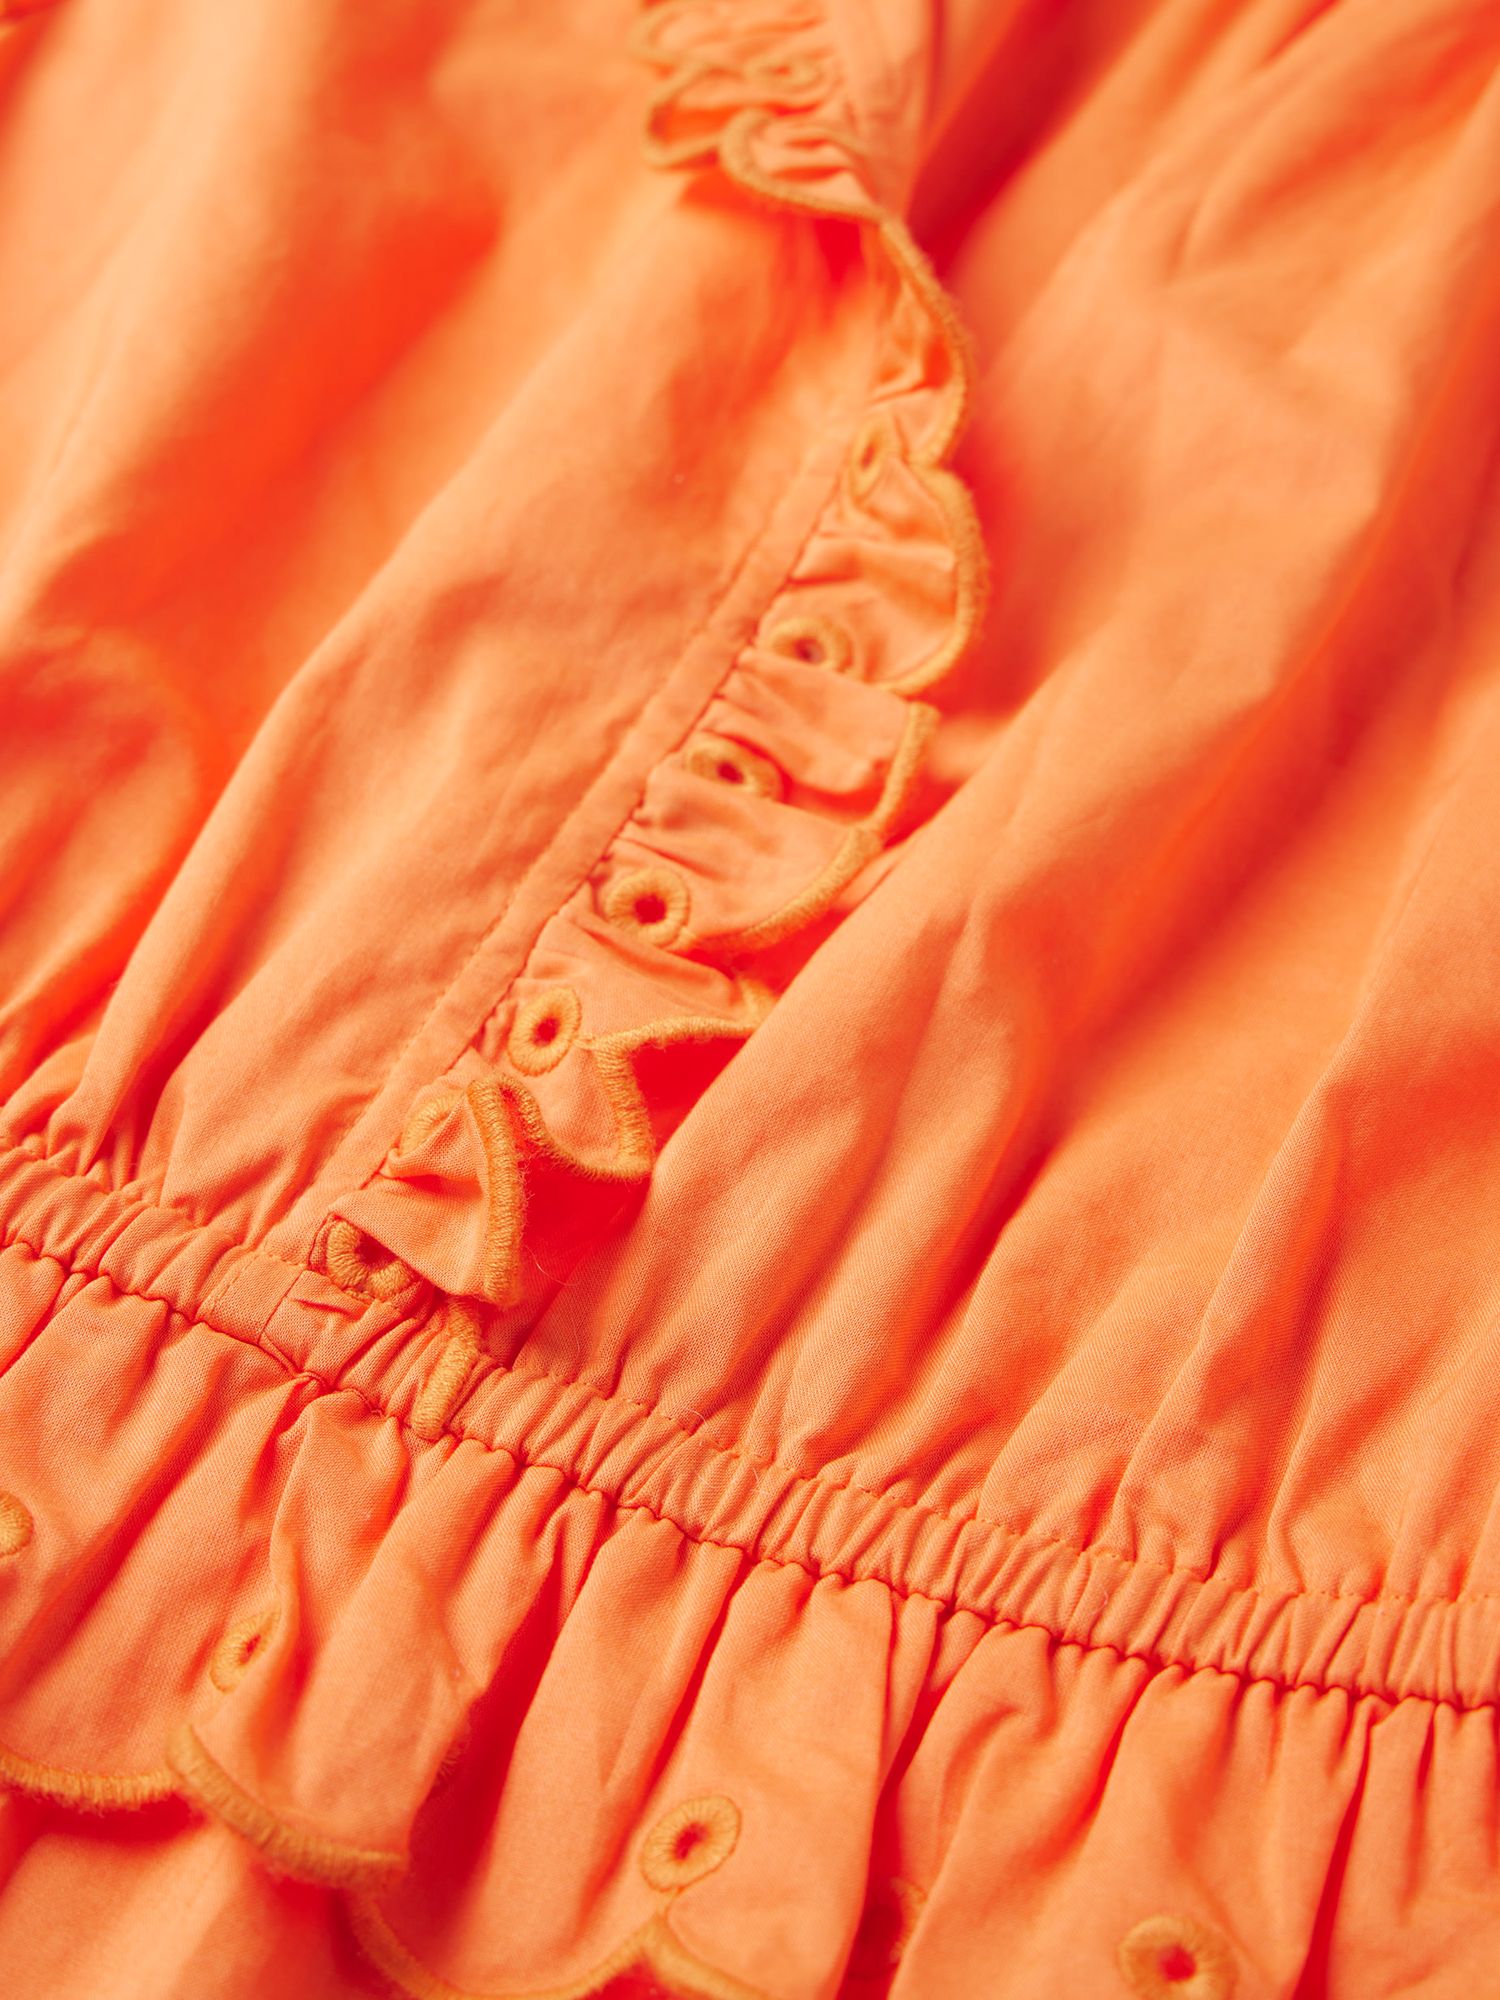 Buy Mint Velvet Tiered Cotton Maxi Dress, Orange Online at johnlewis.com